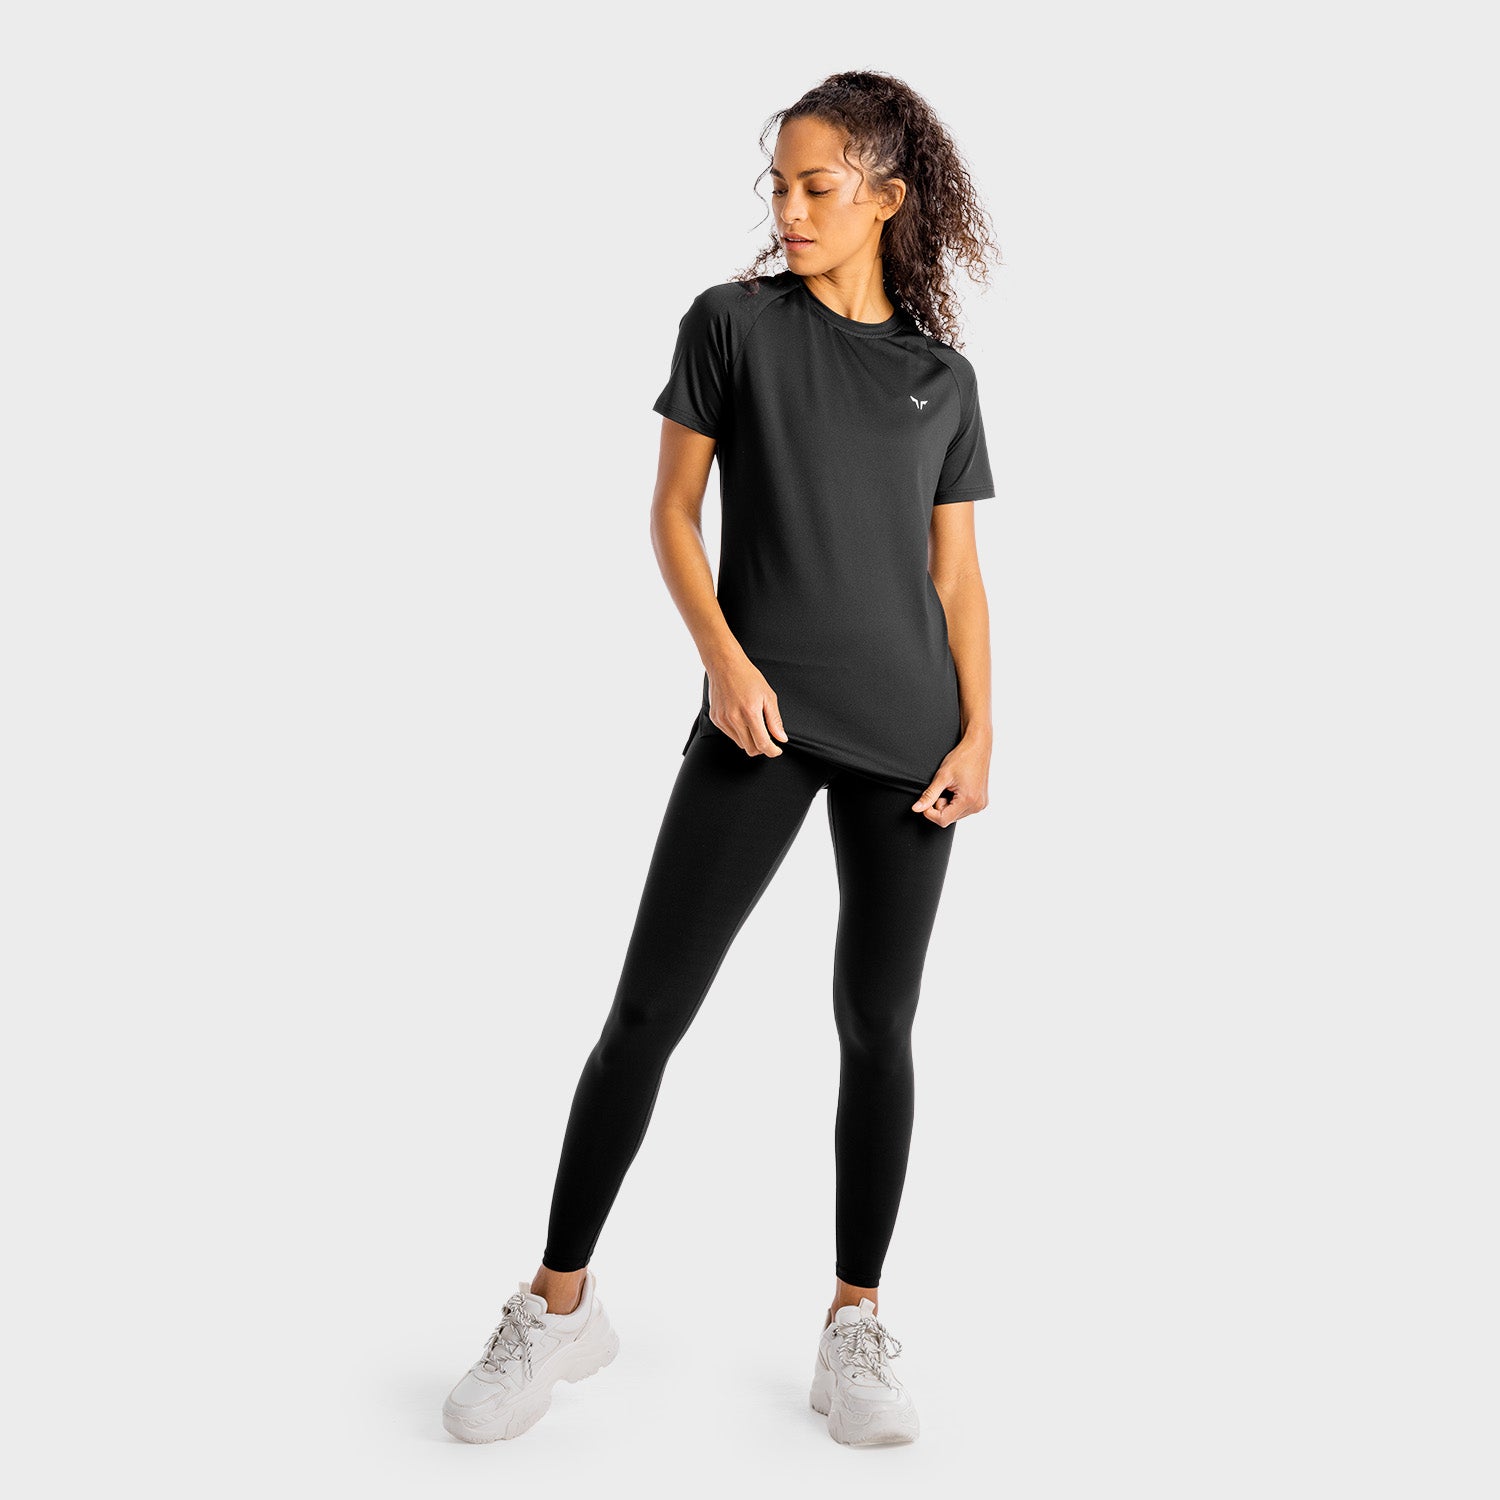 AE, Core Mesh Tee - Black, Workout Shirts Women